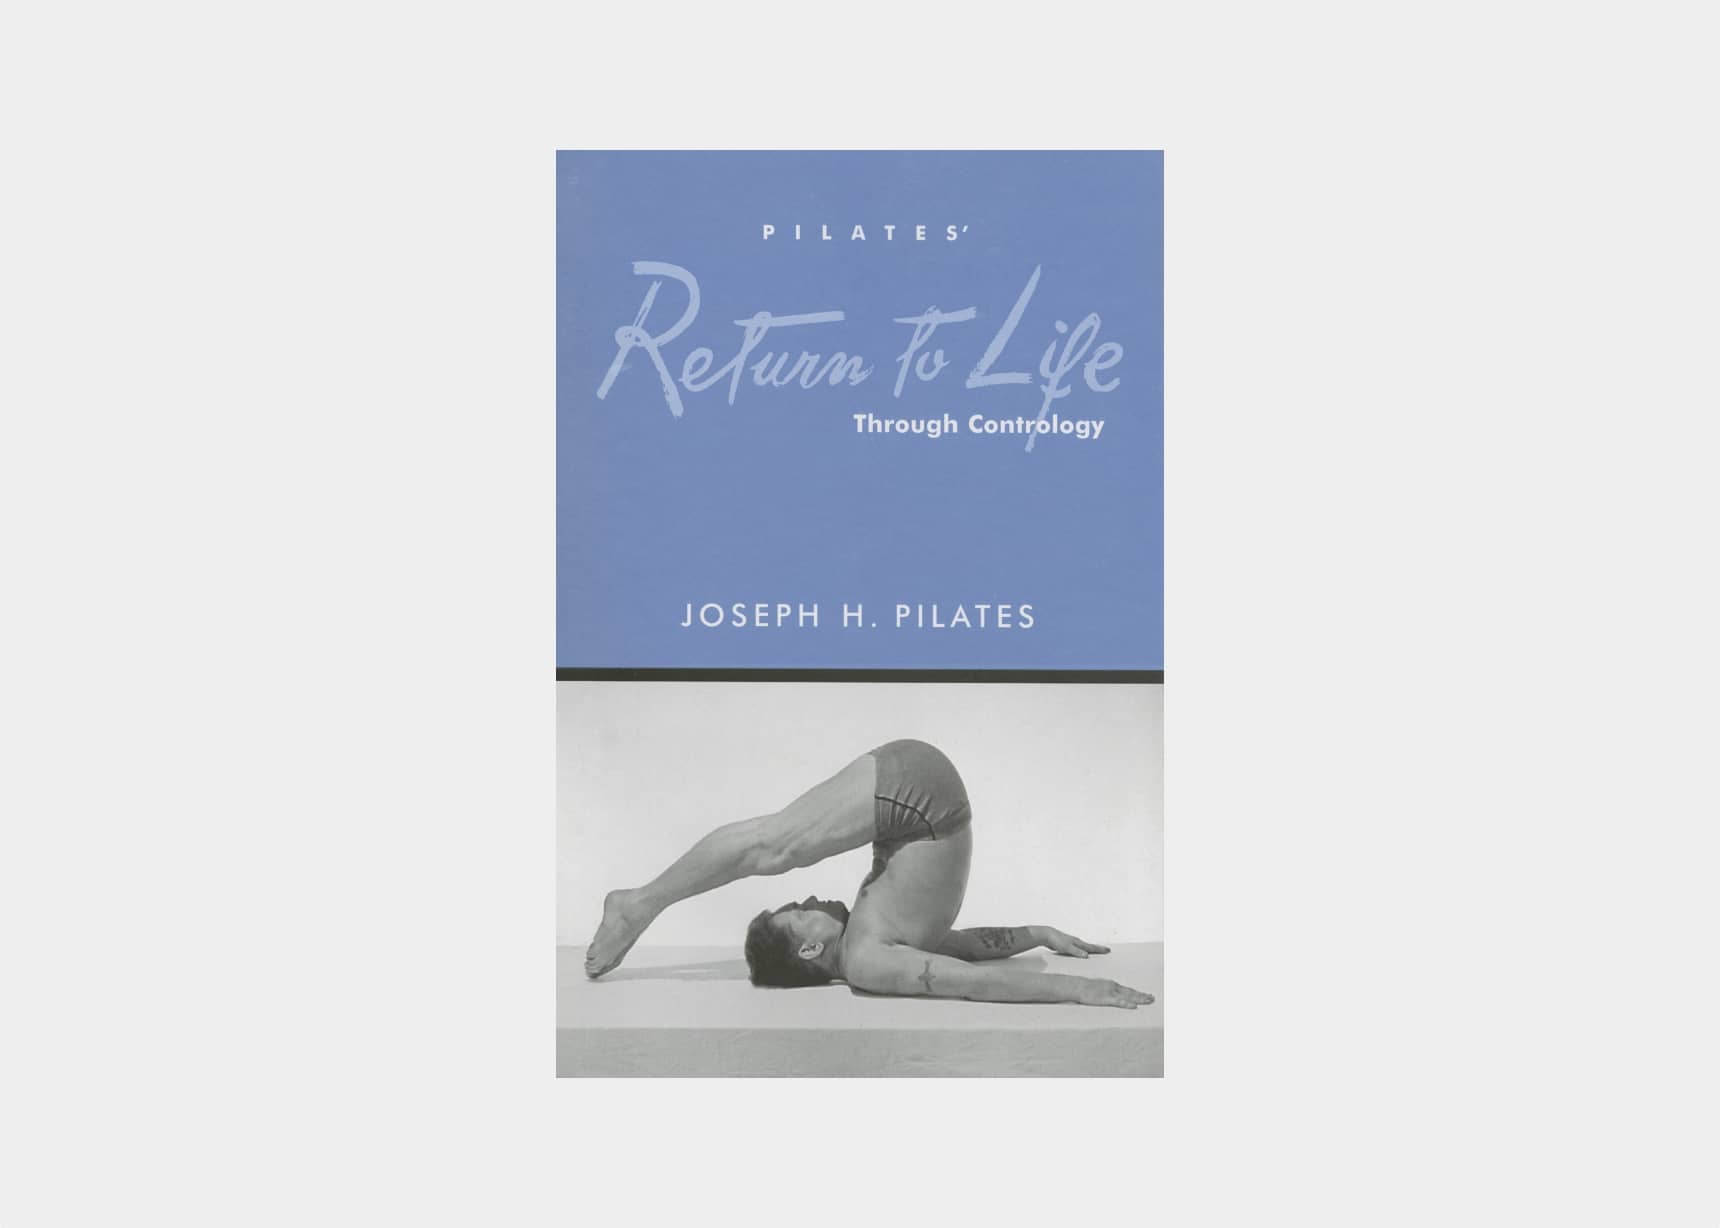 History of Joseph Pilates